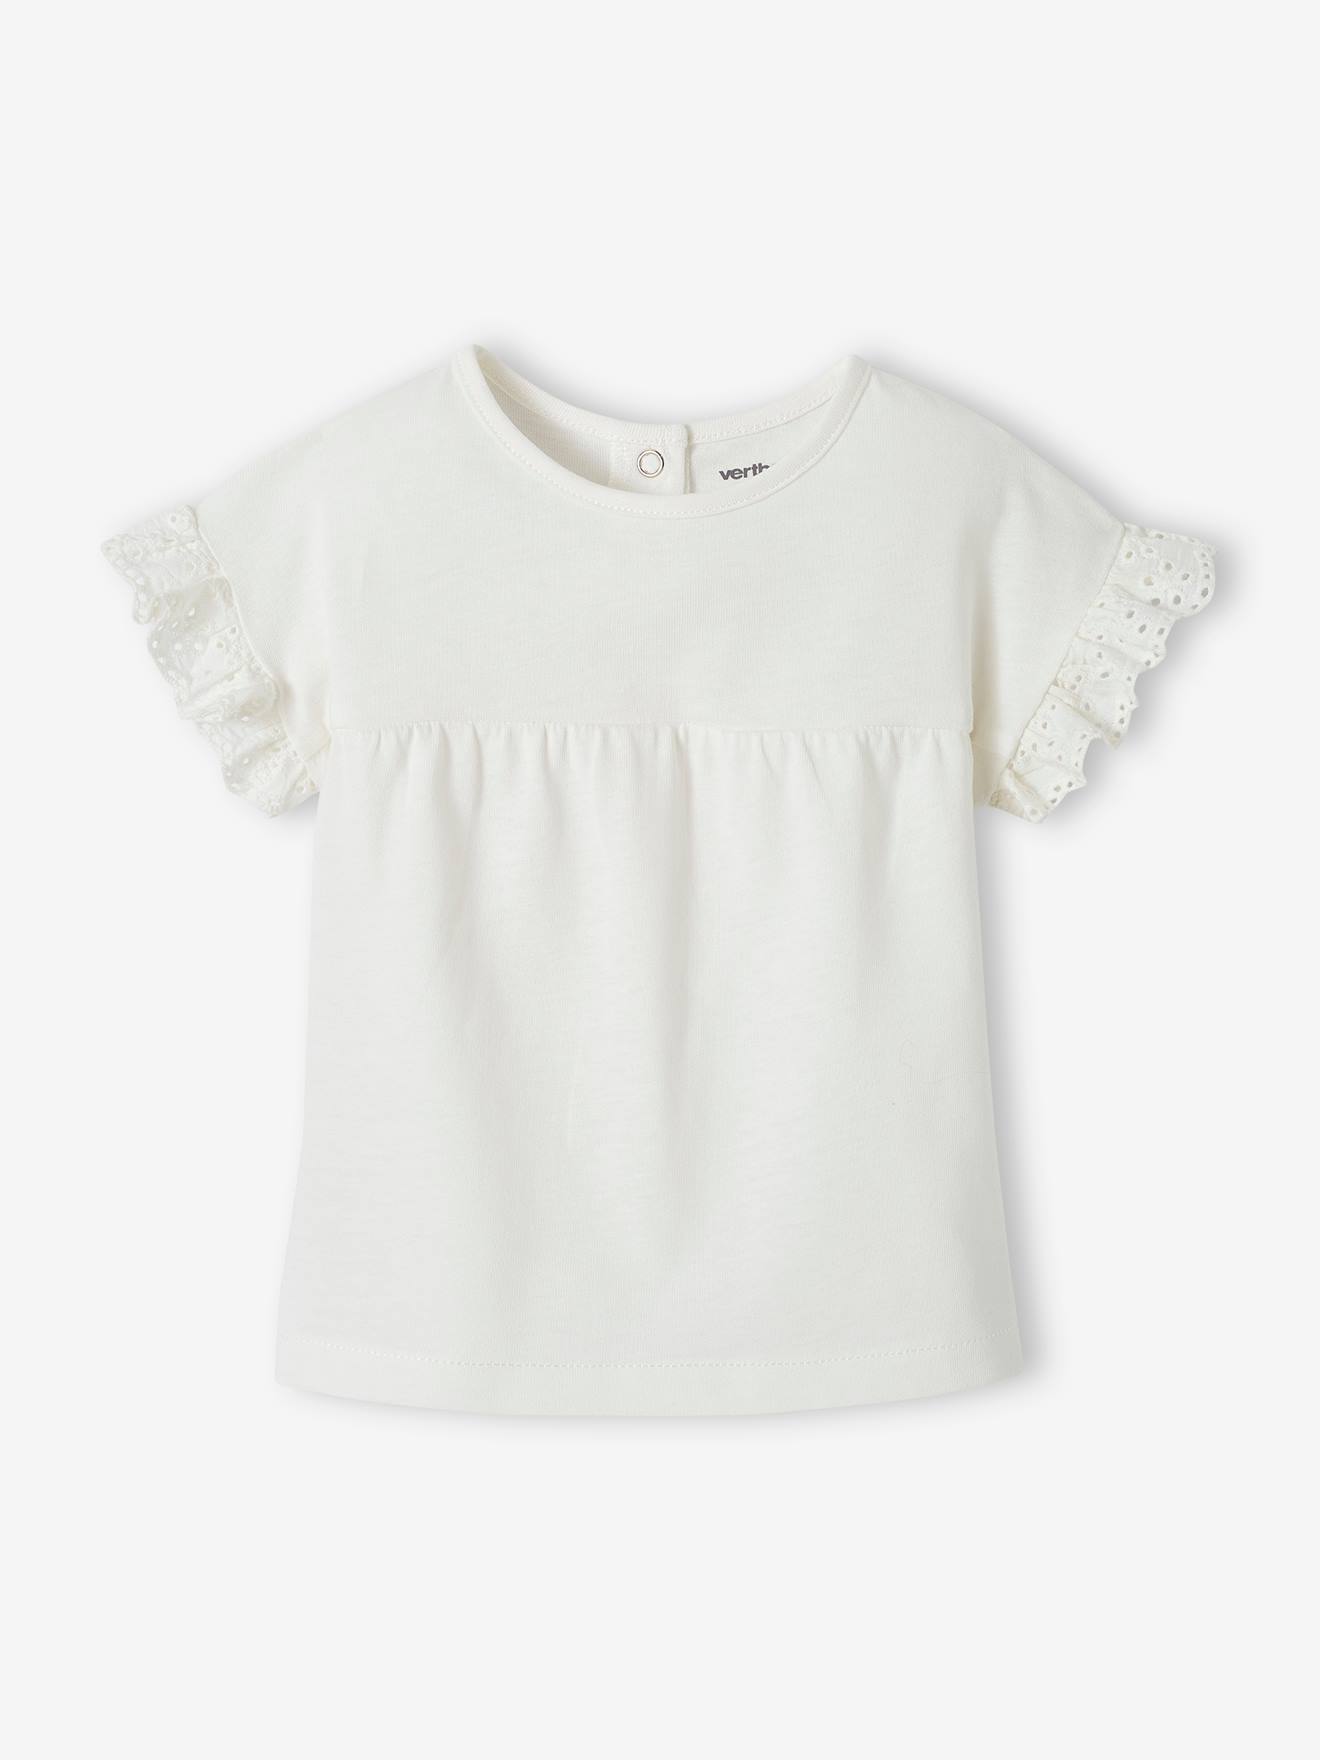 VERTBAUDET Camiseta personalizable de algodón orgánico para bebé crudo